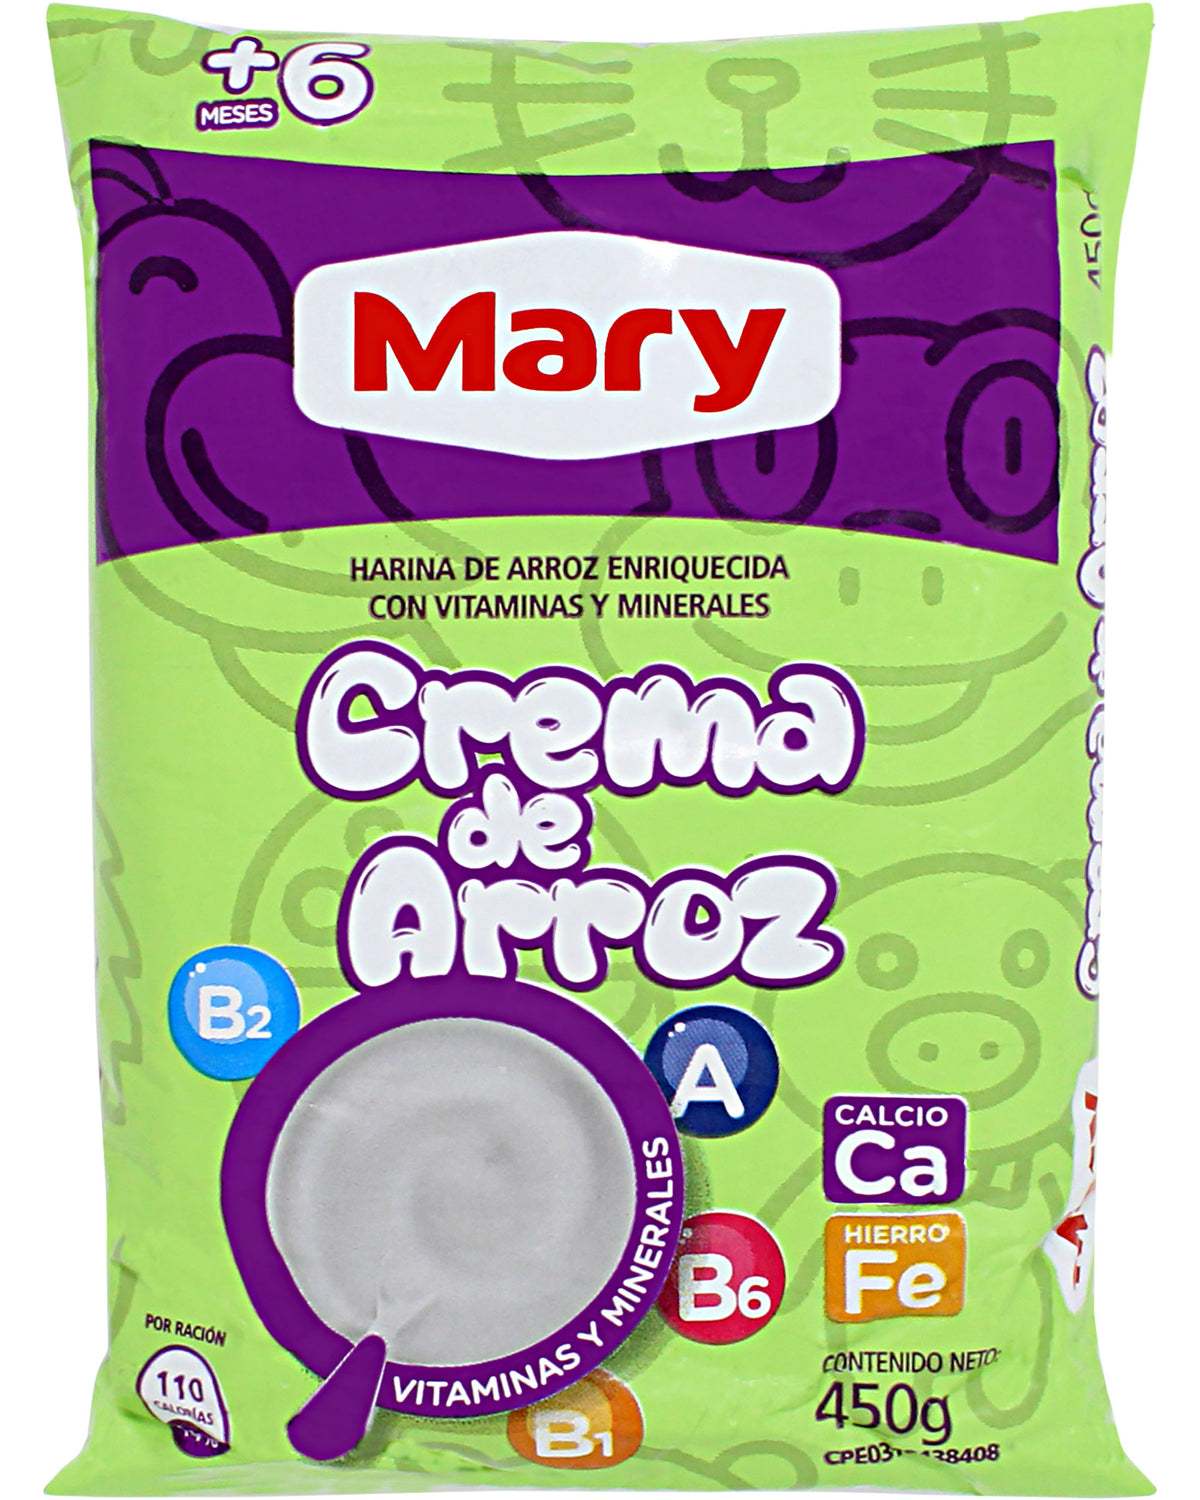 Find Mary Crema de Arroz (Rice Flour) - 15.8 oz / 450 g Mary X for